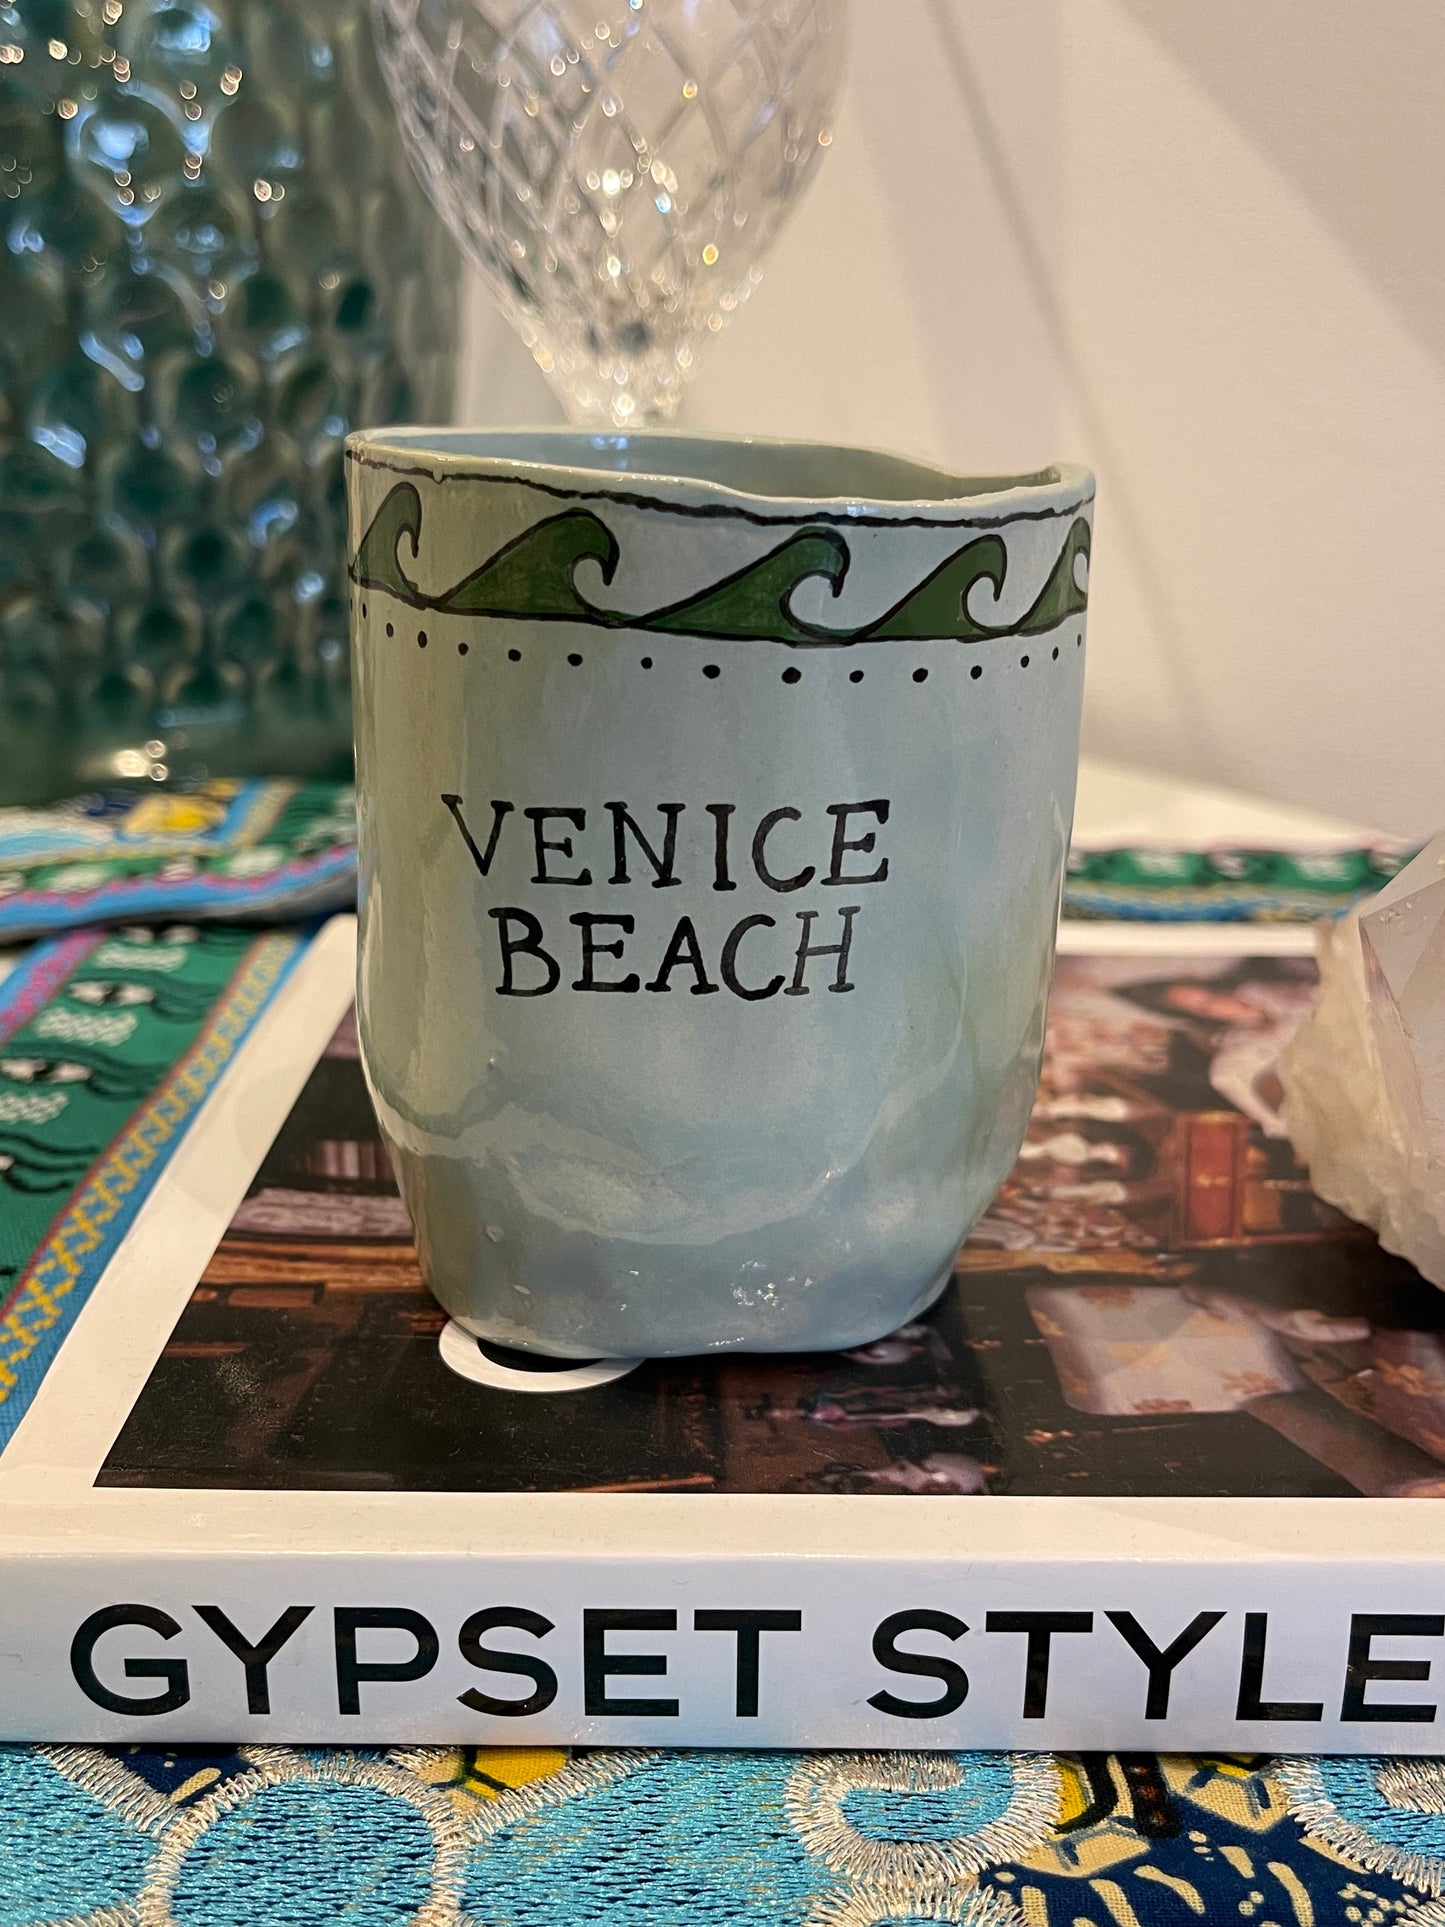 Venice beach brush pot